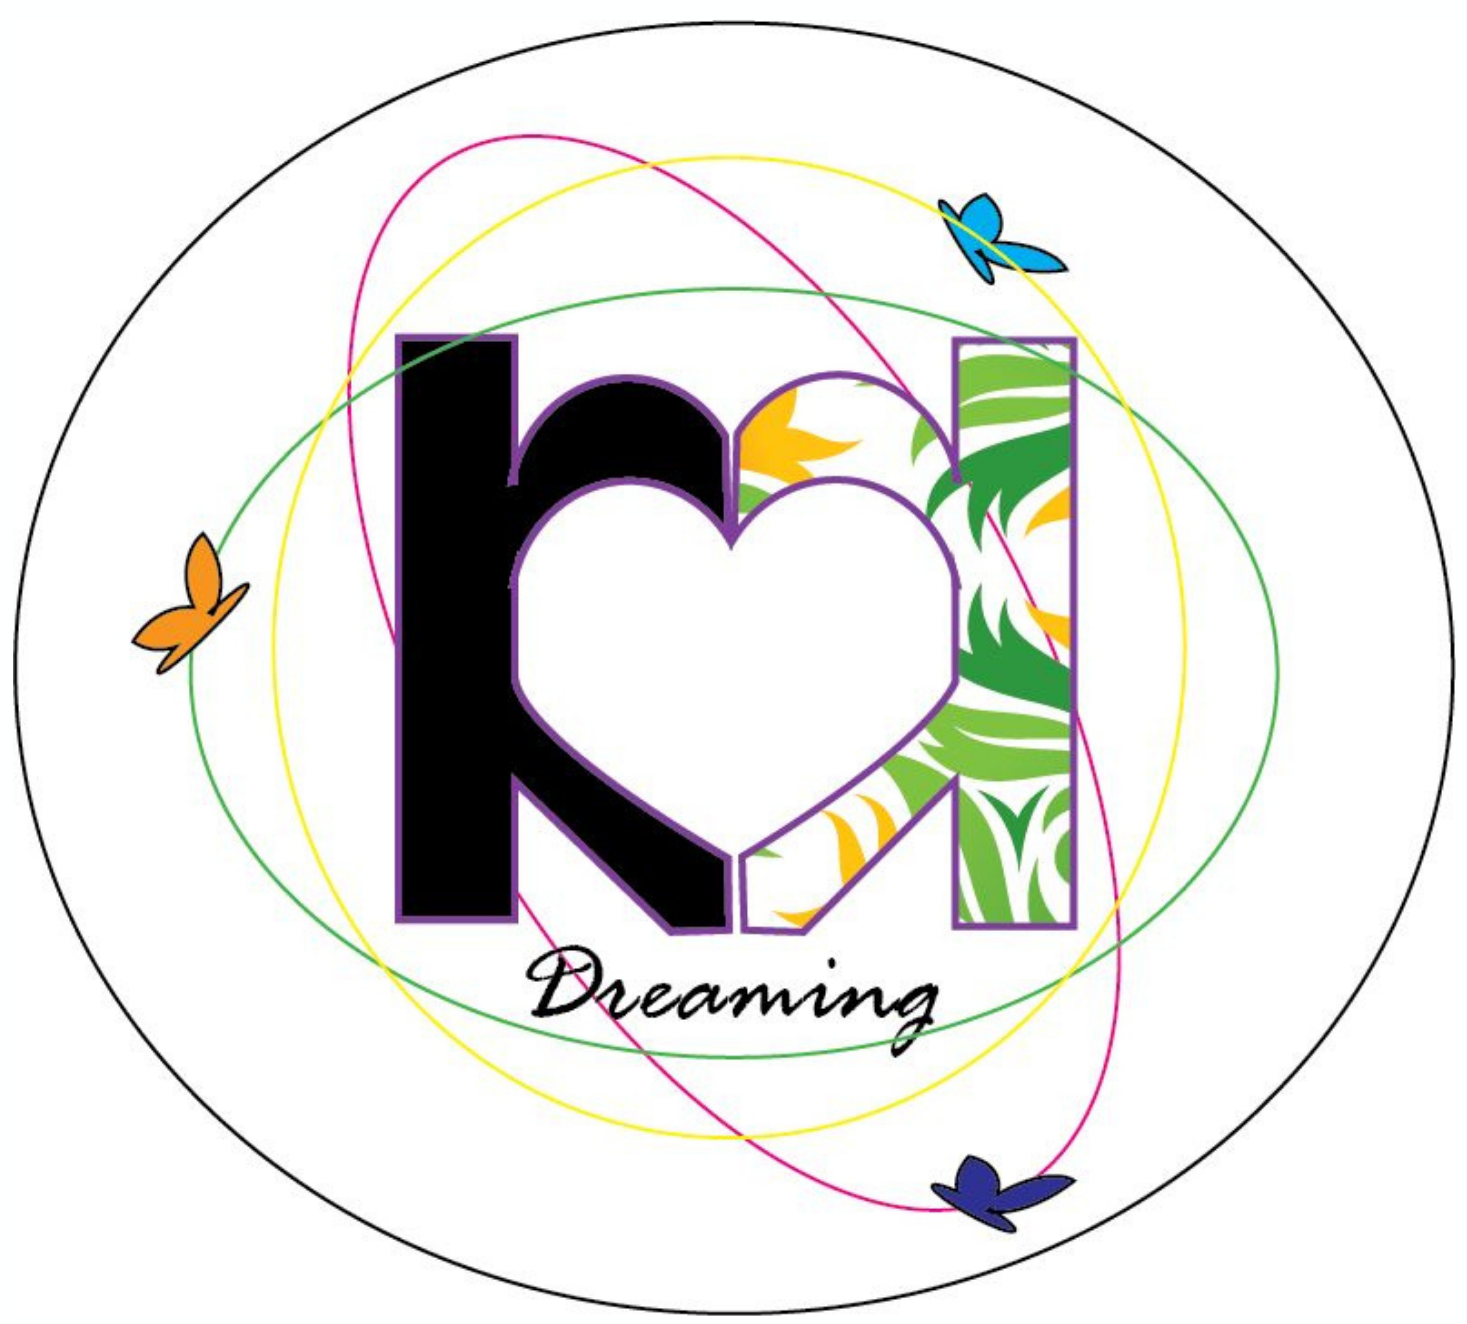 K&K Dreaming